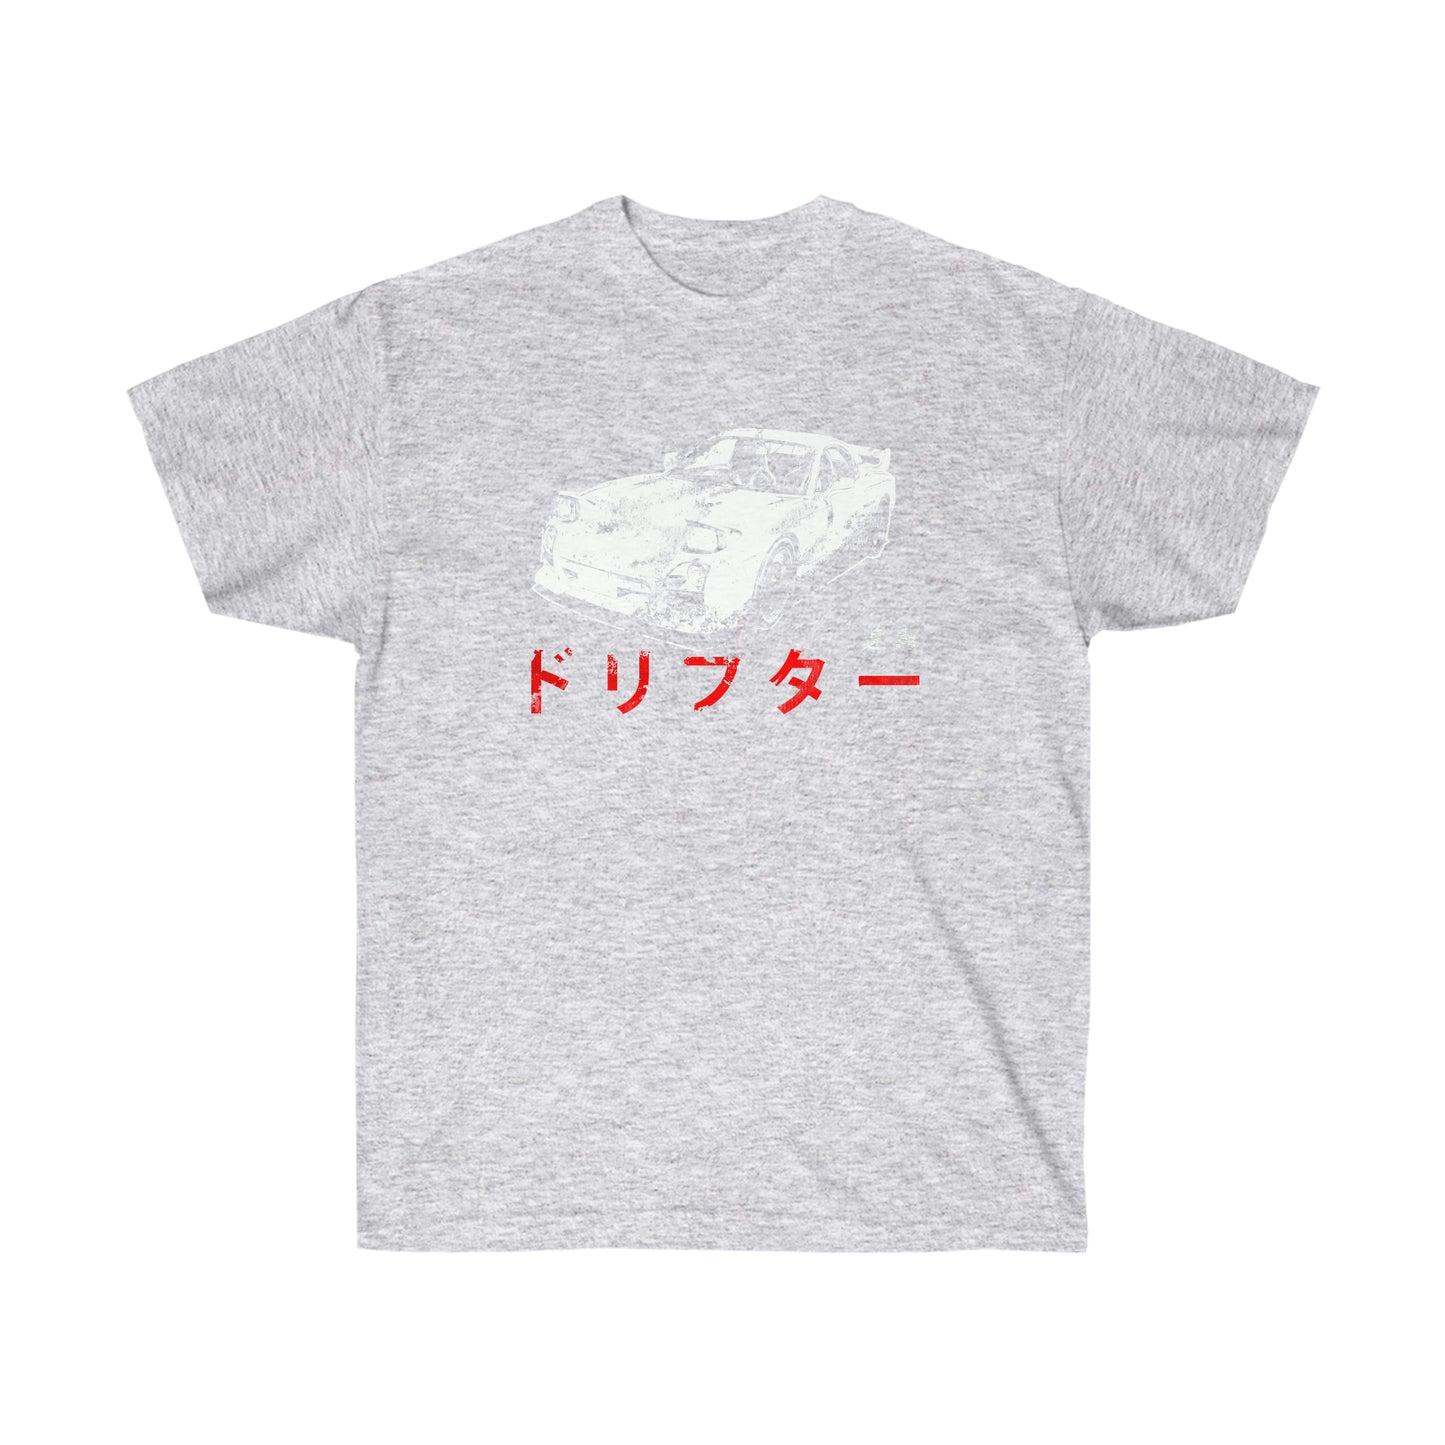 Japanese Street Racing Shirt T-Shirt Tee Aesthetic Shirt Aesthetic,Aesthetic Clothing, Japanese Shirt, Japanese Car, Car Racing JDM